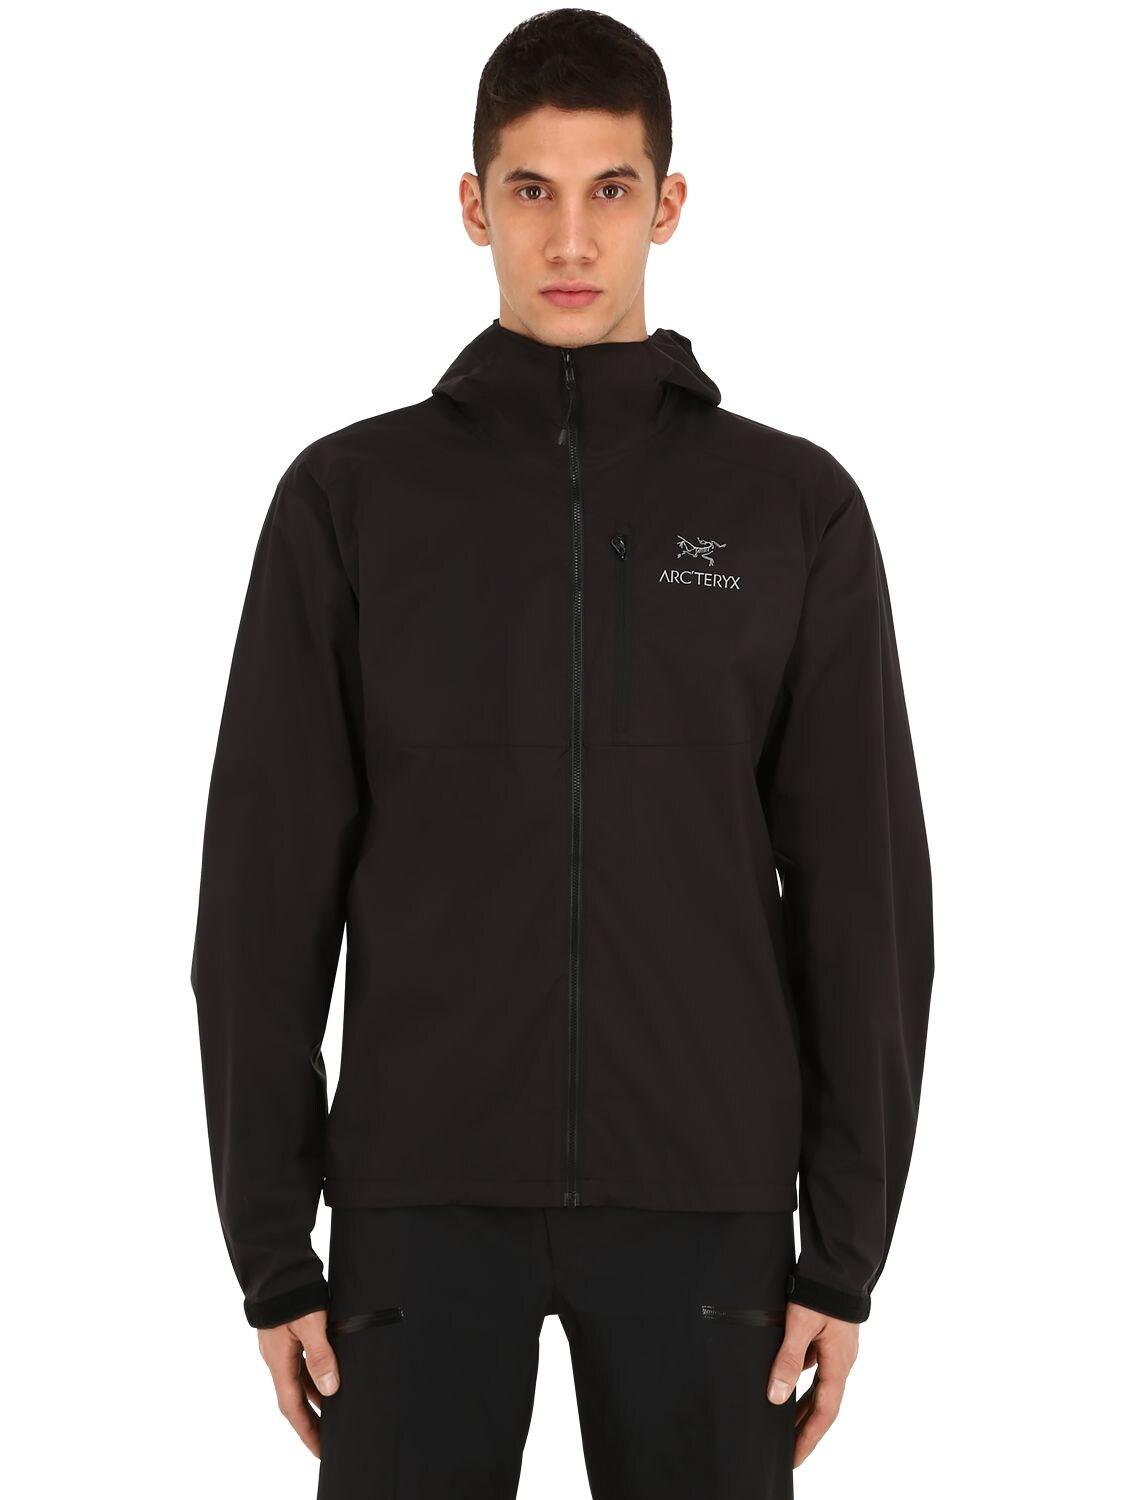 Arc'teryx Synthetic Squamish Hooded Nylon Jacket in Black for Men - Lyst